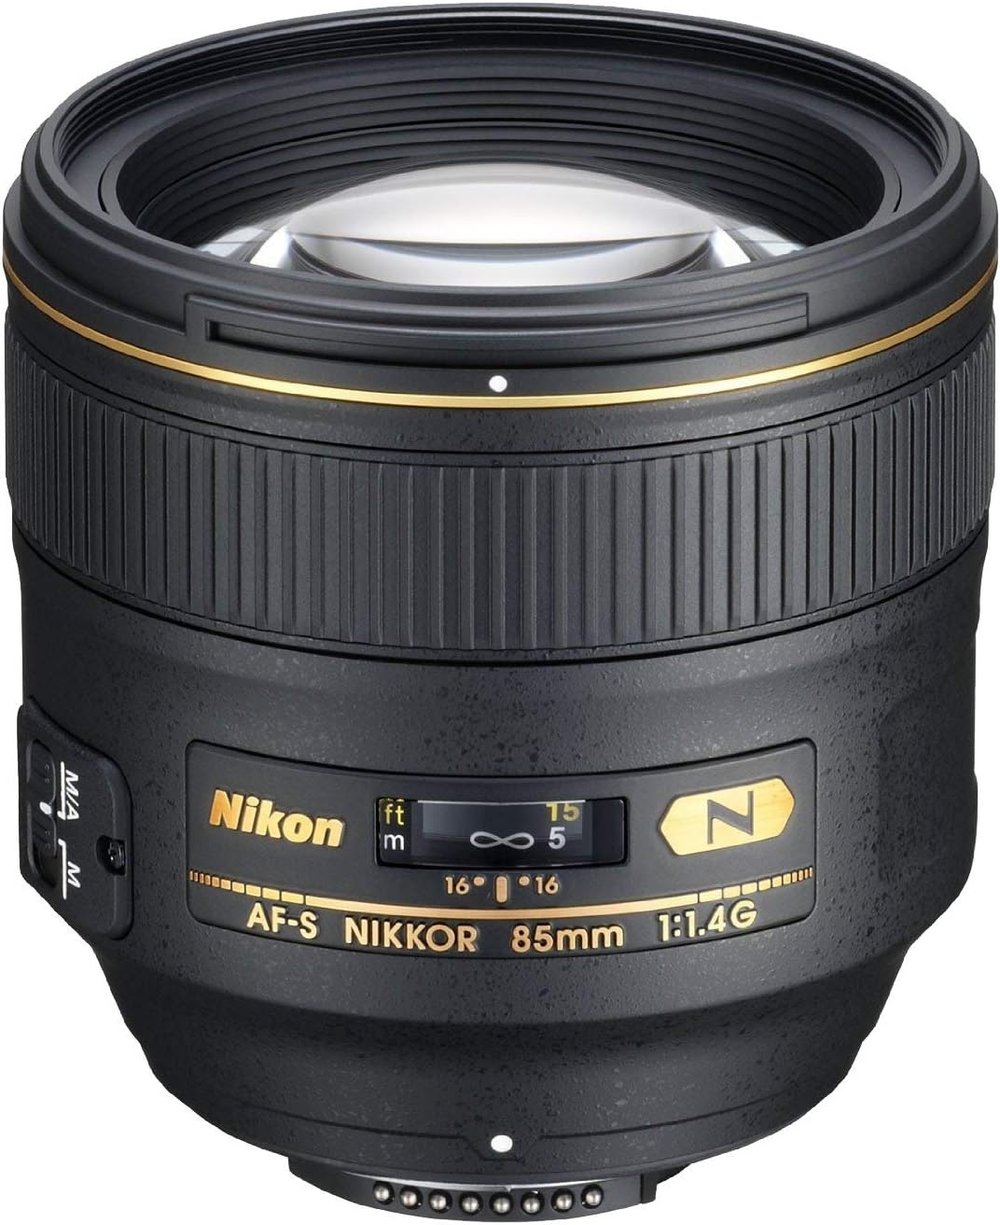 Nikon 85mm 1.4G lens